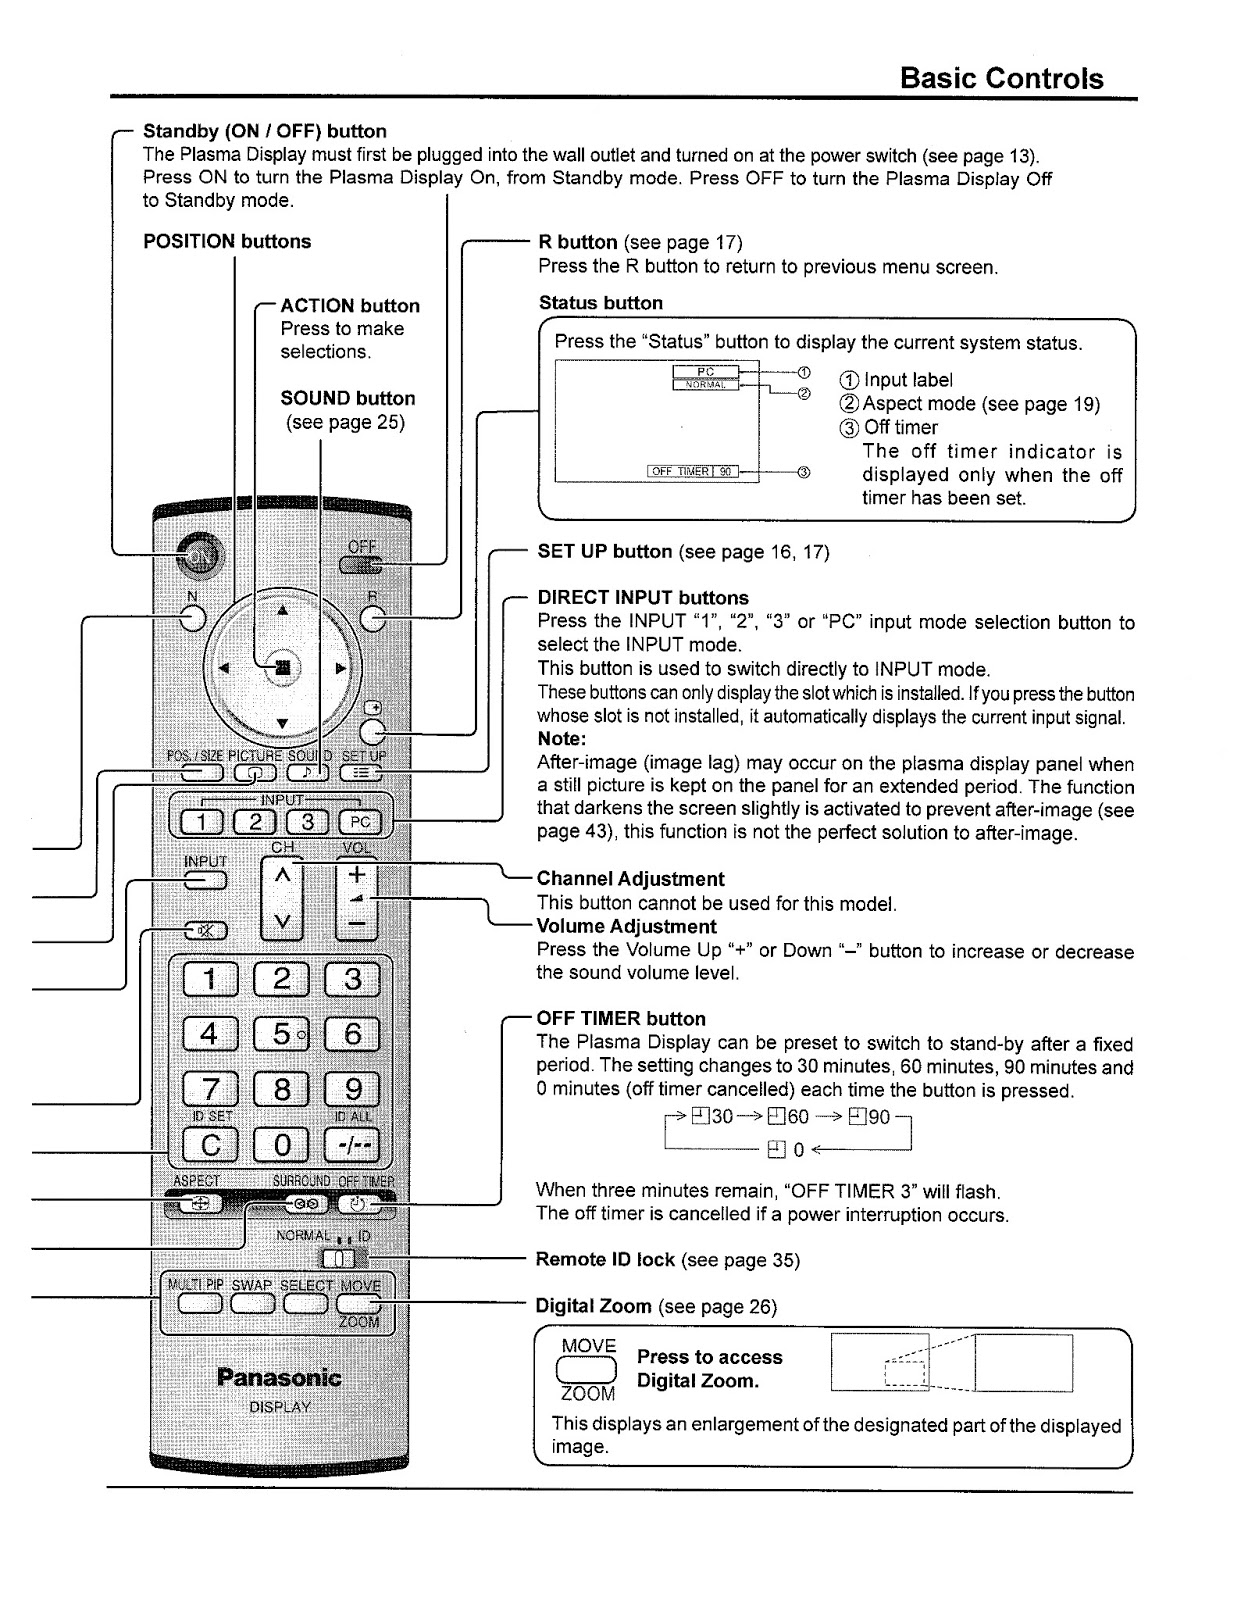 panasonic vsqs1488 remote control manual free download